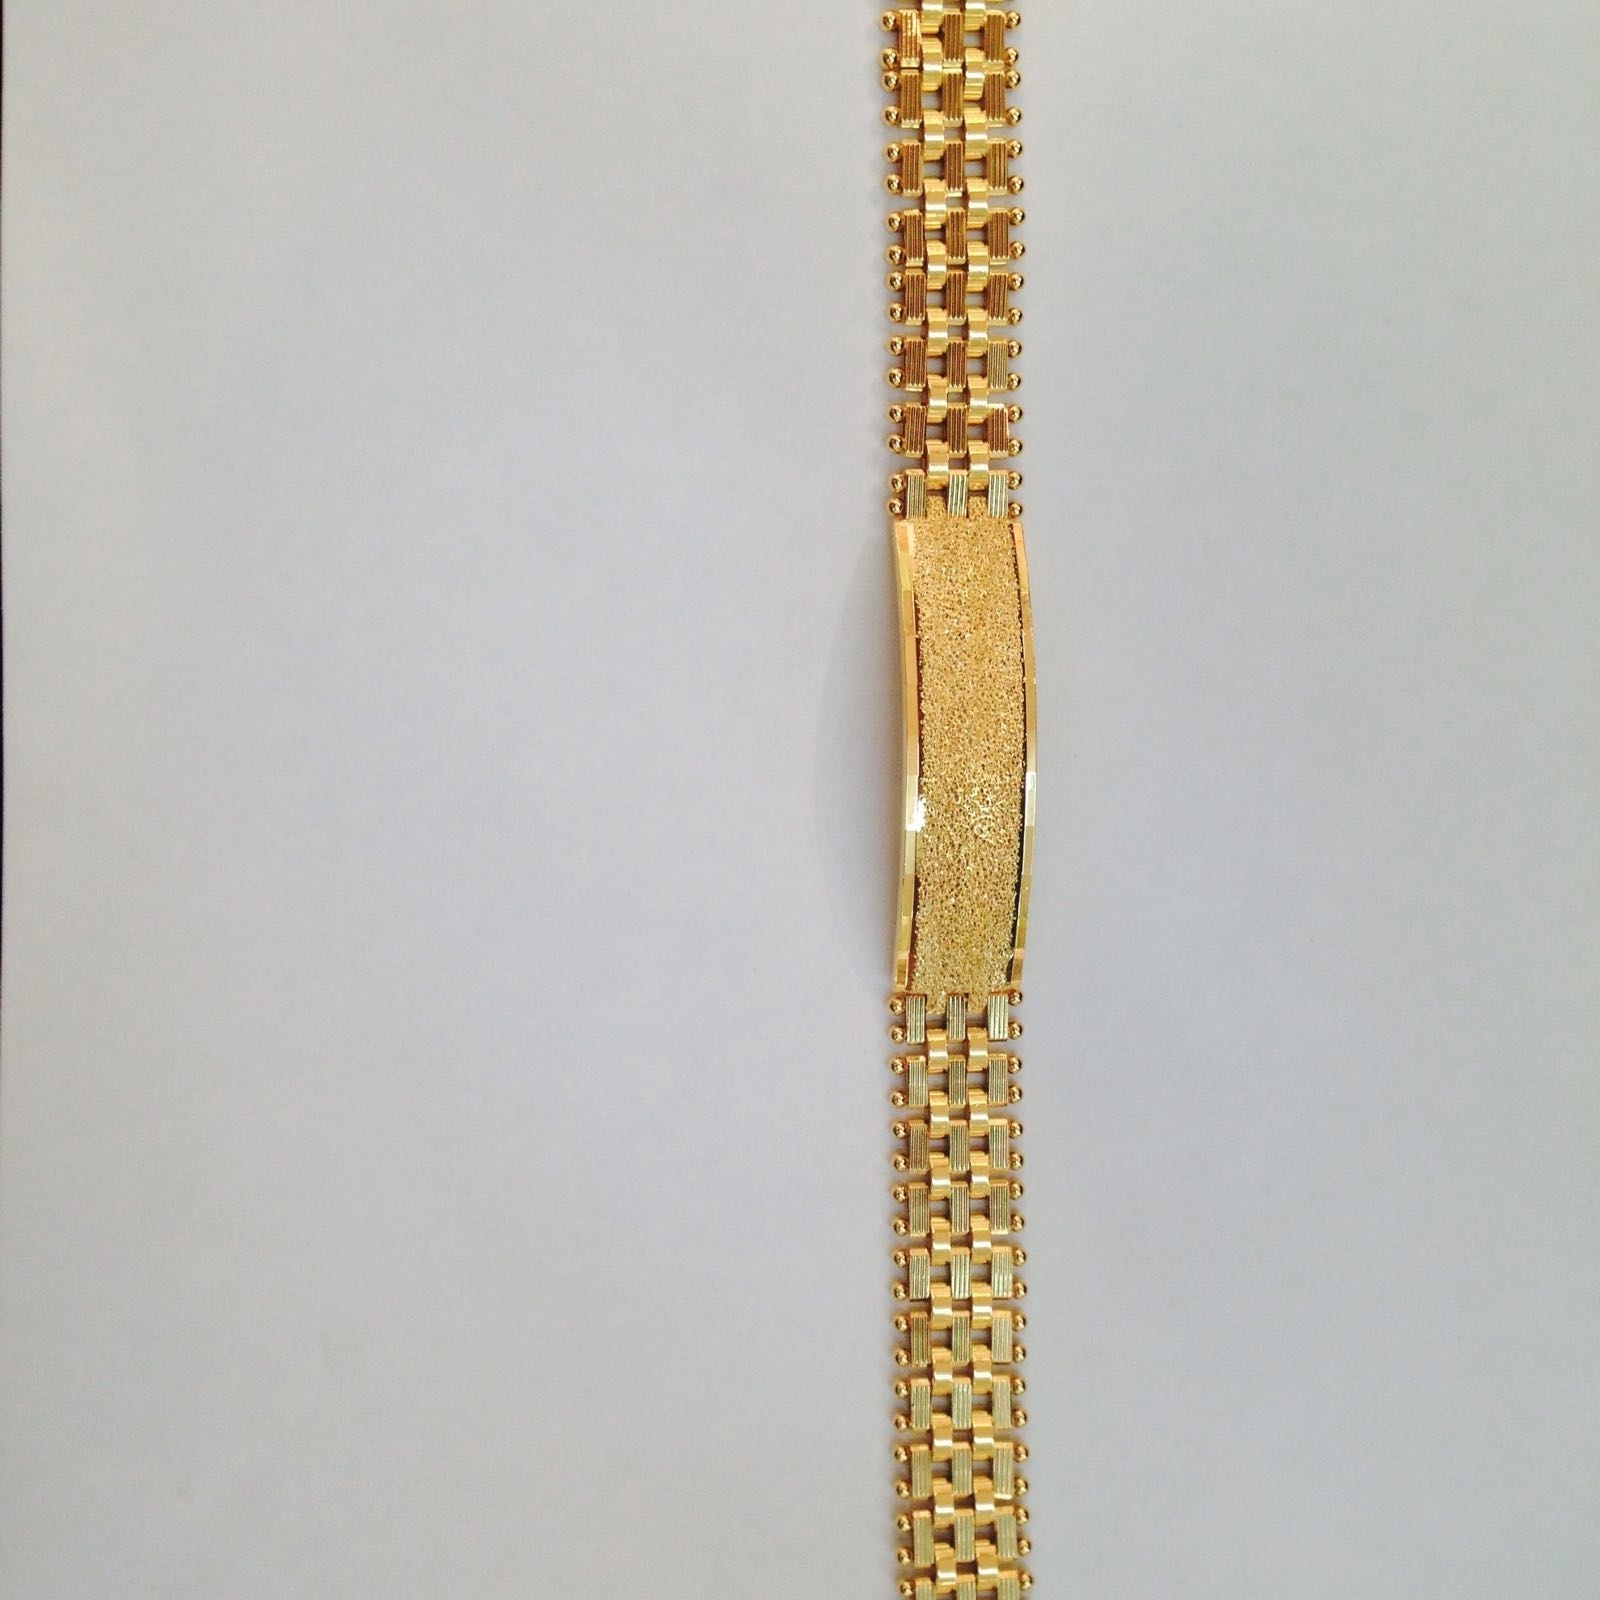 RM 18k Gold Rolex style ID Bracelet